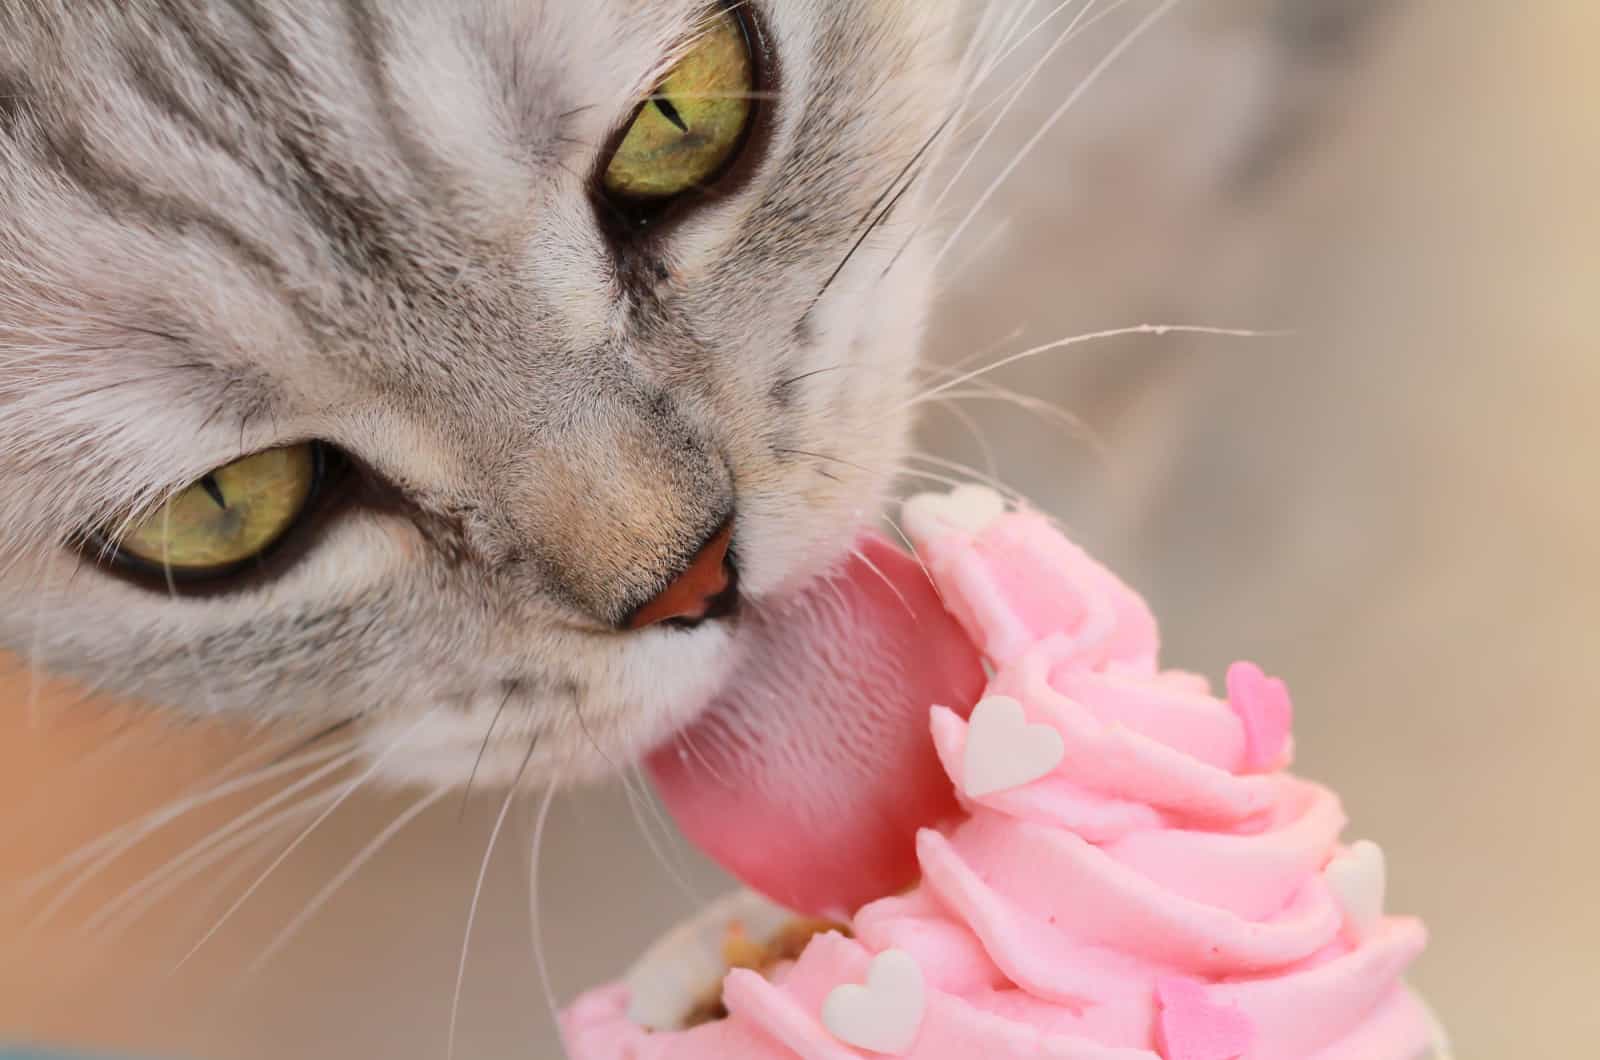 cat eating a cupcake